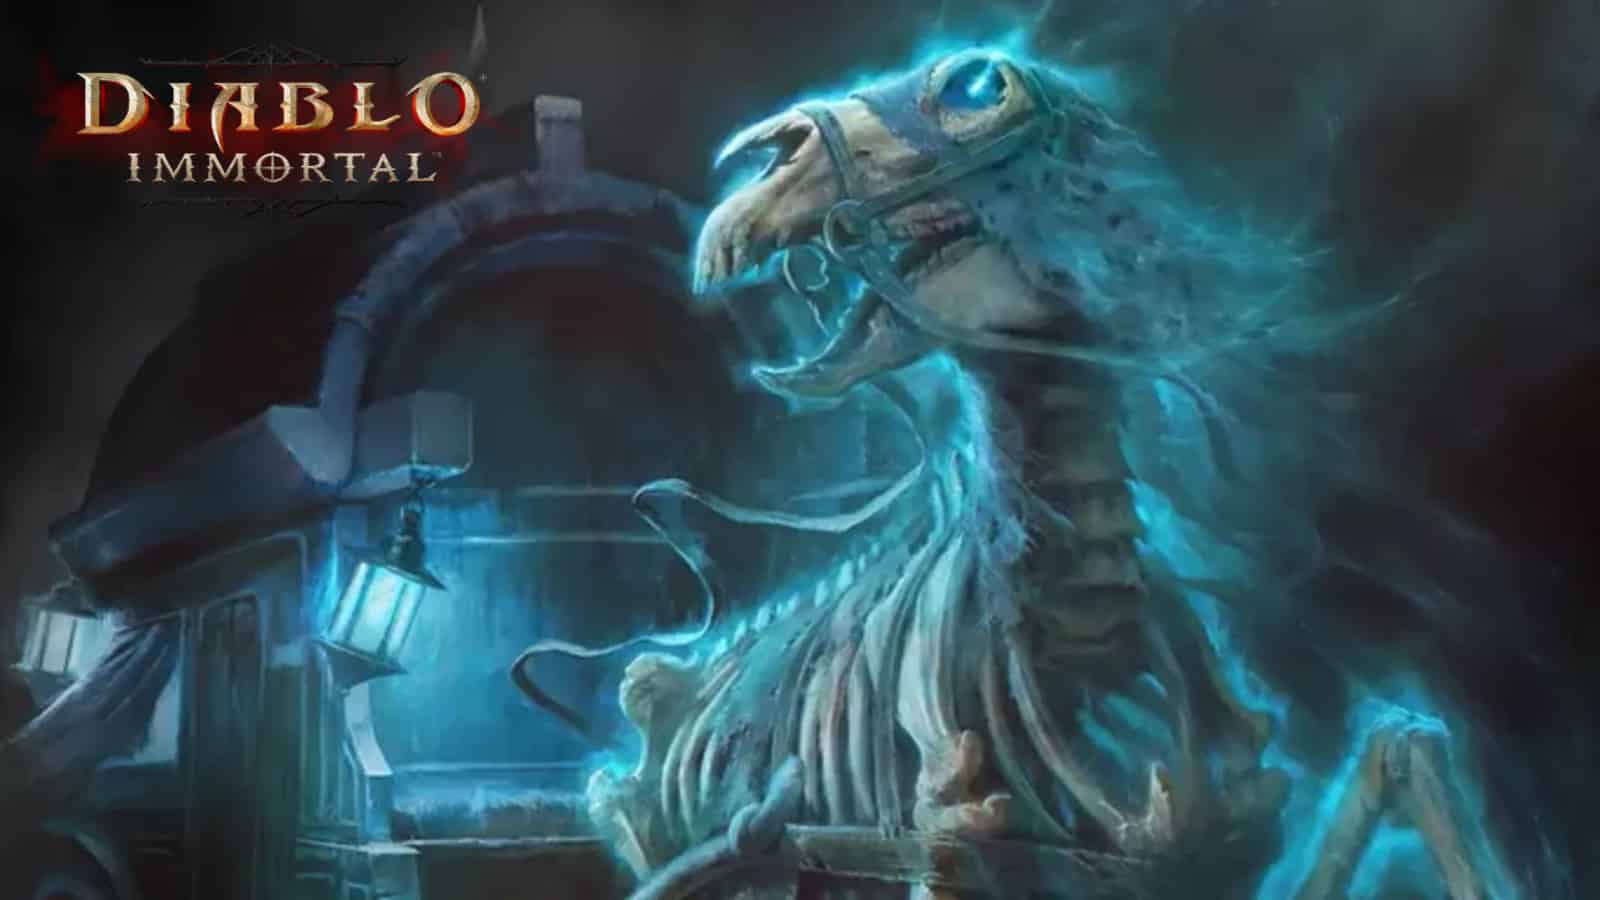 Diablo Immortal Founding Discord Event: Dates, Times & Rewards